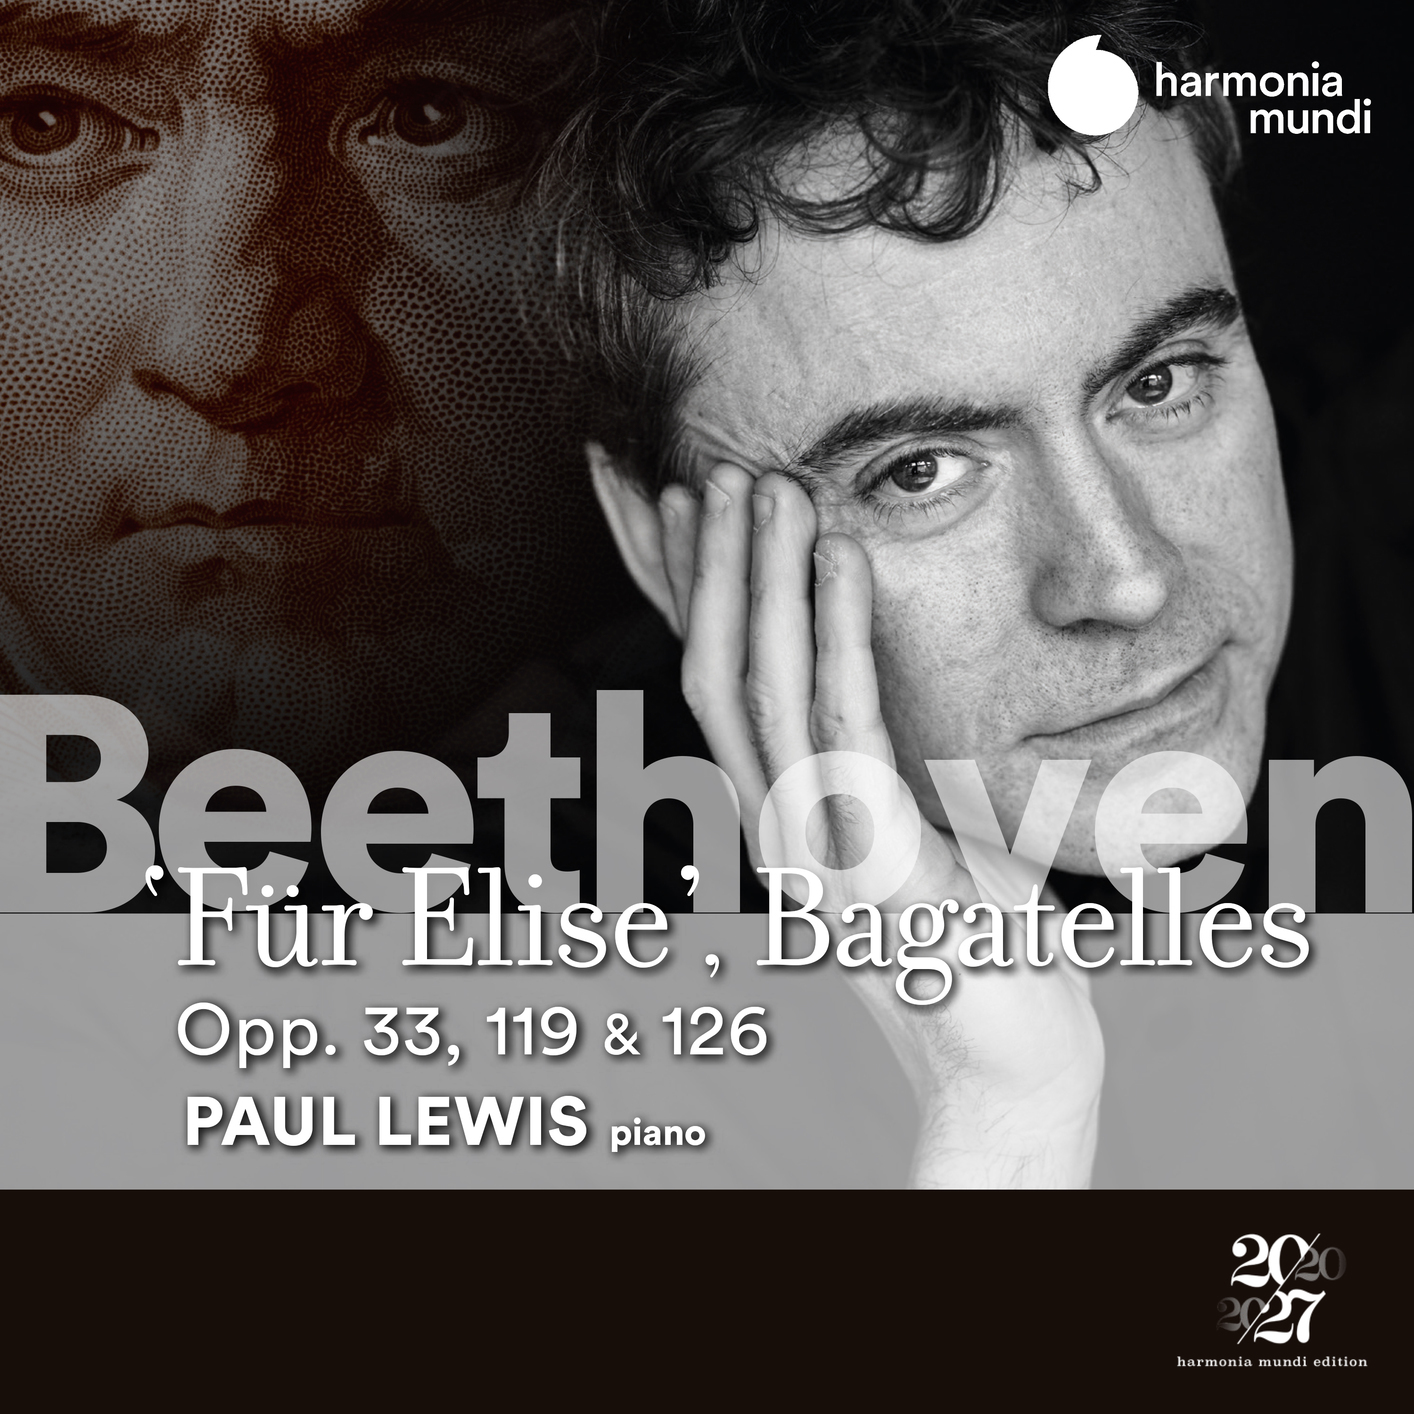 Paul Lewis - Beethoven - Fur Elise, Bagatelles Opp. 33, 119 & 126 (2020) [FLAC 24bit/96kHz]